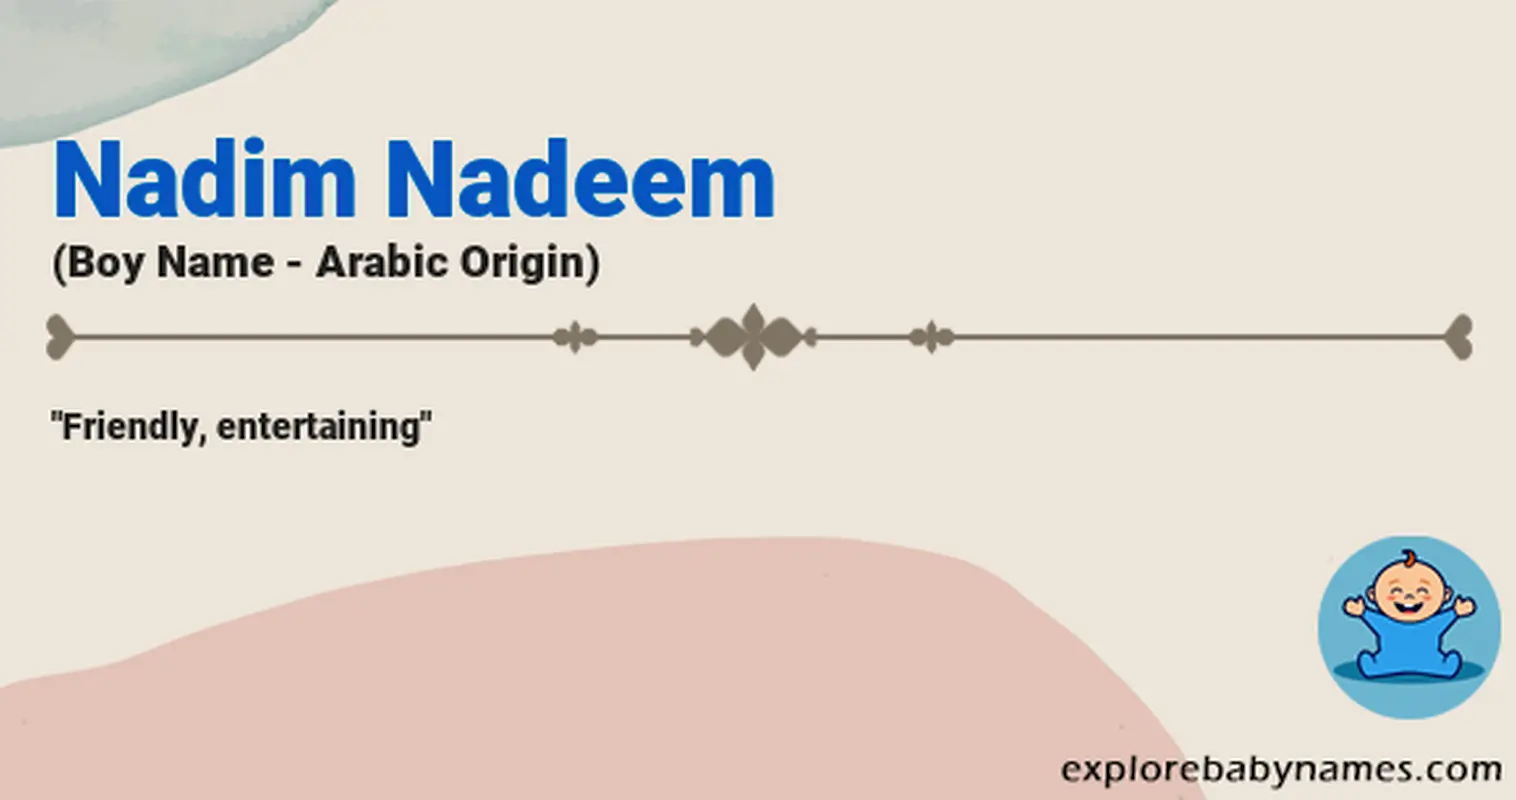 Meaning of Nadim Nadeem